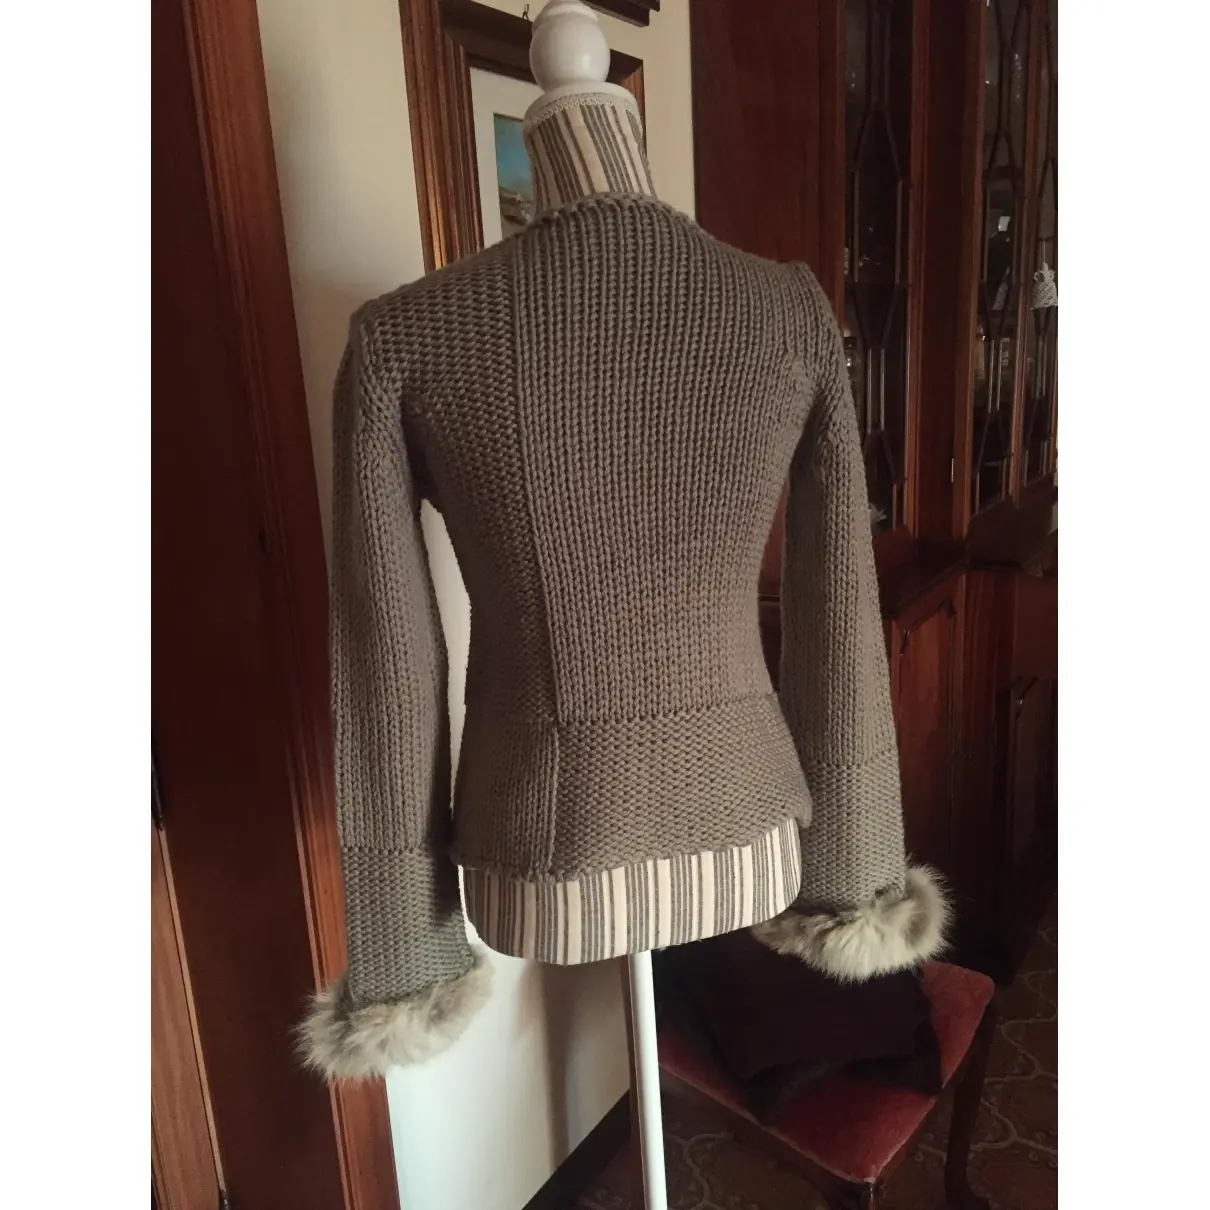 Stephan Janson Wool jumper for sale - Vintage